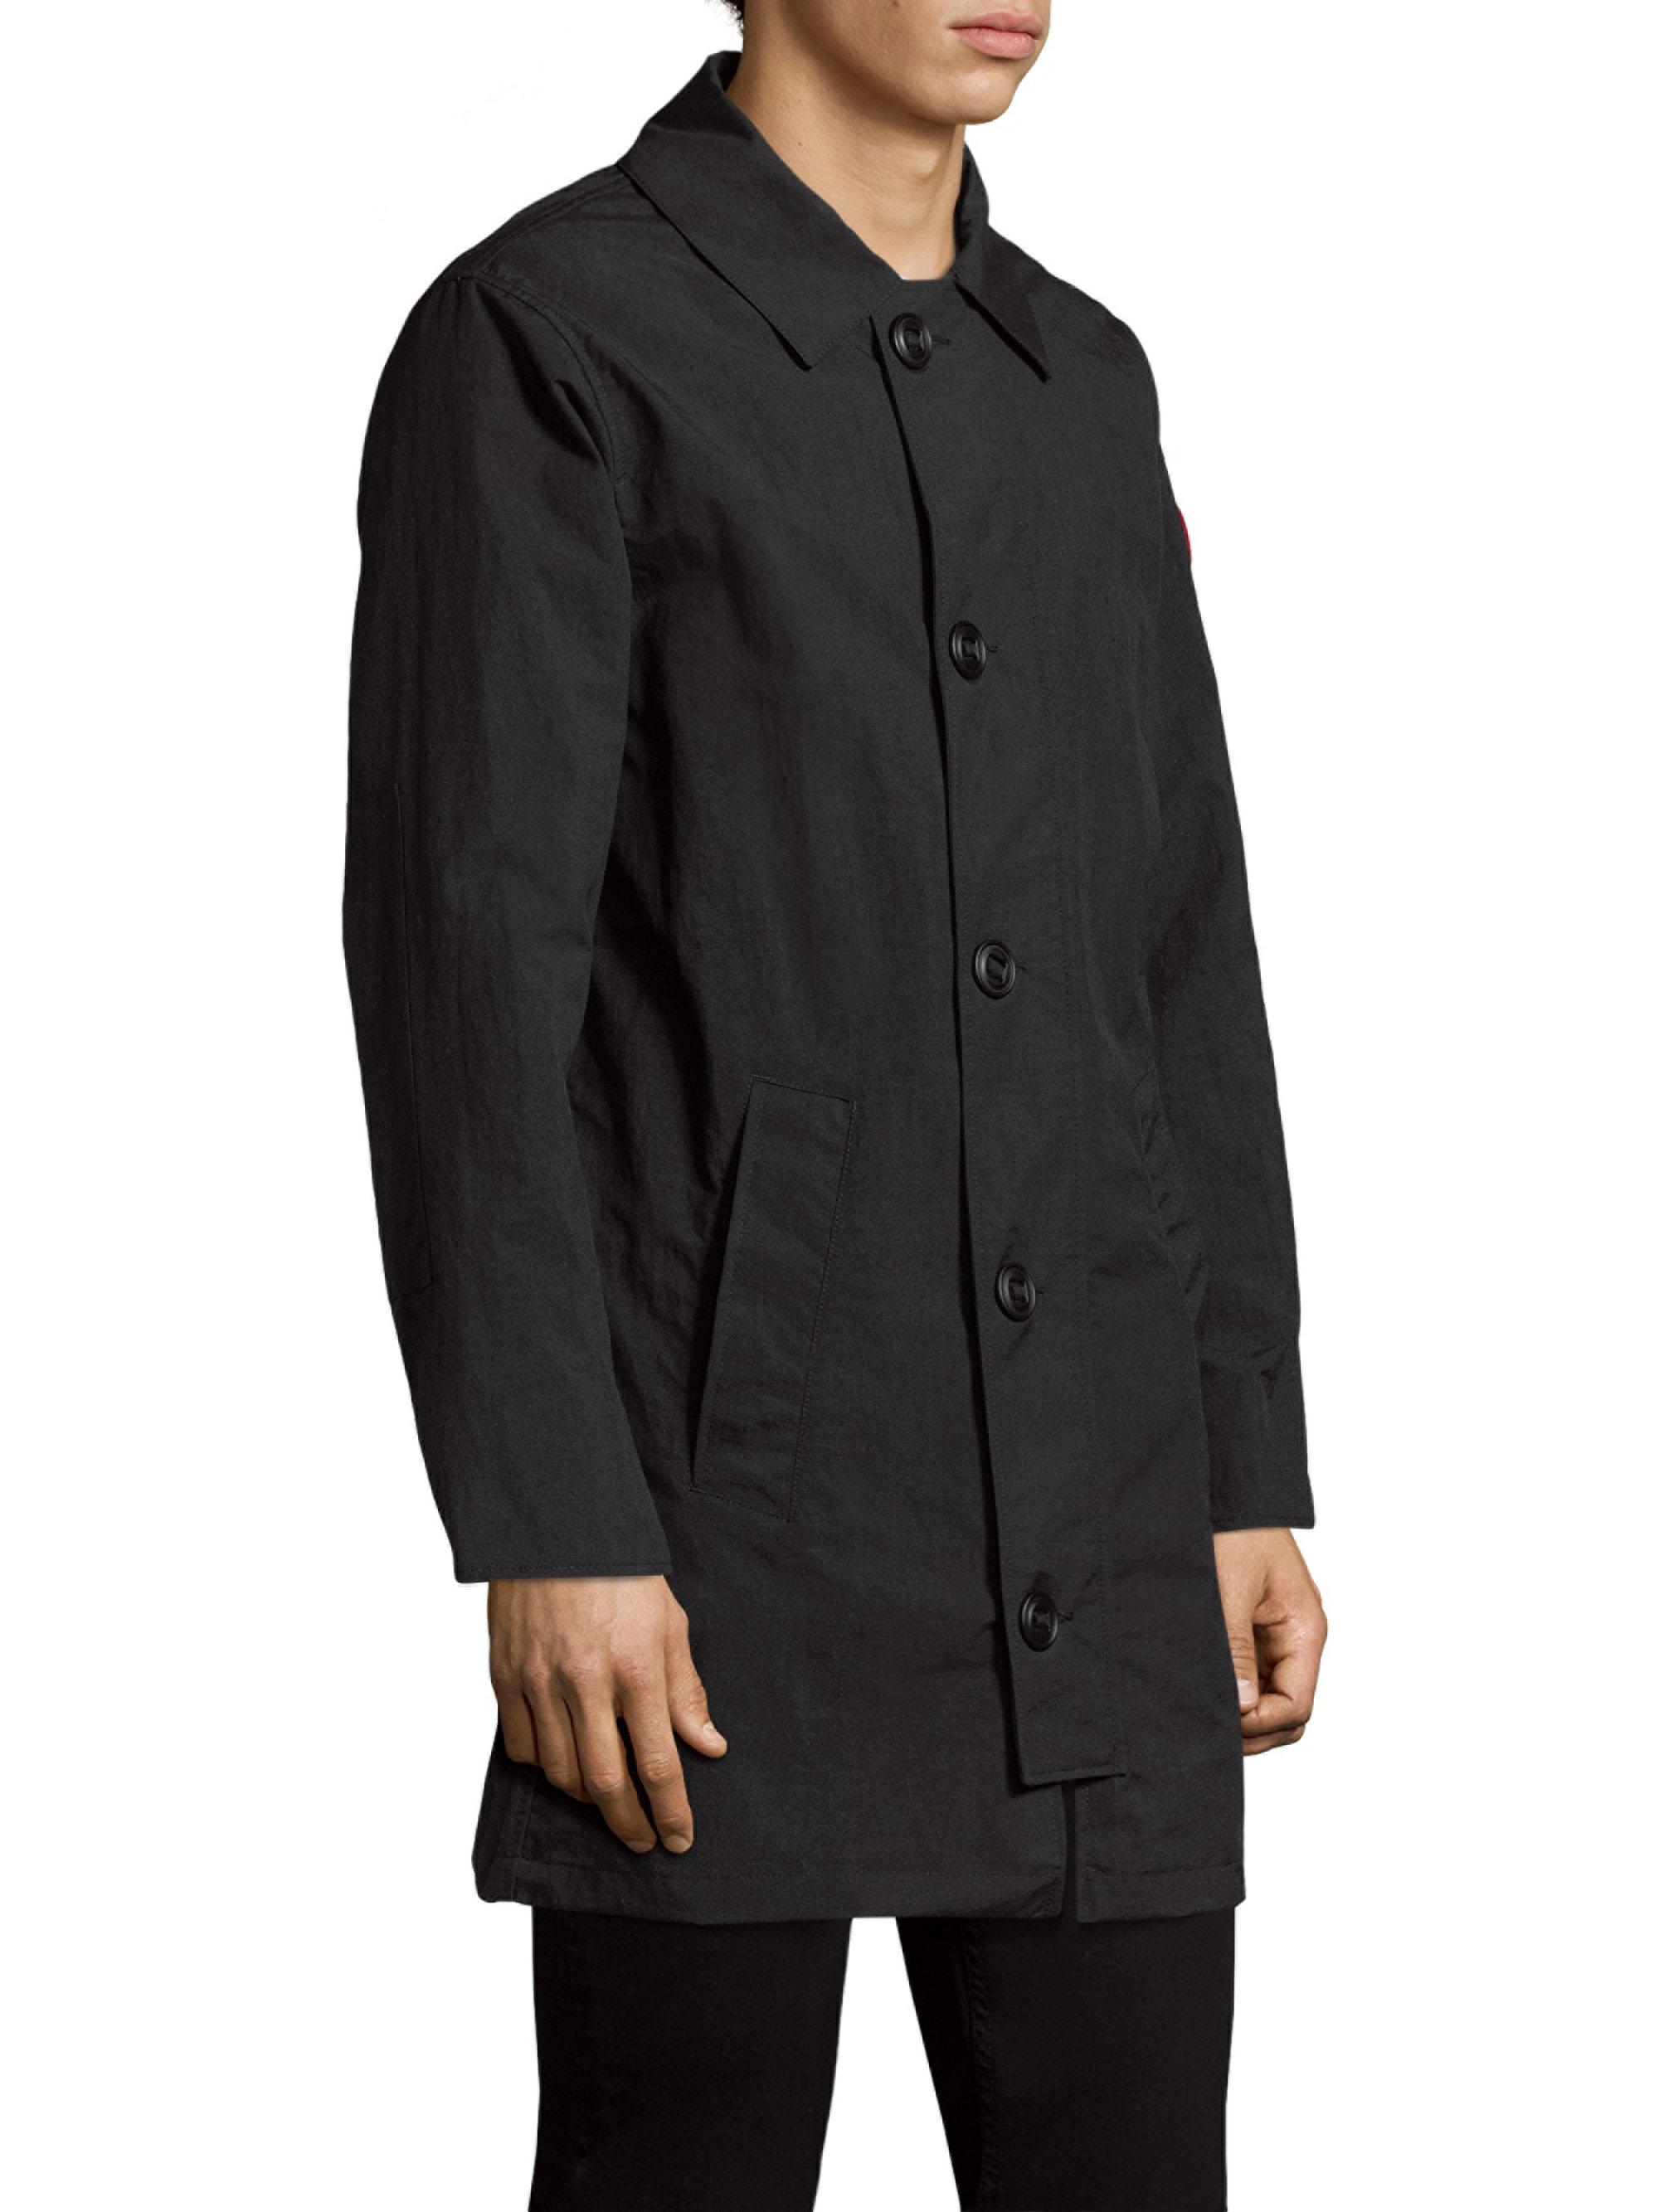 Canada Goose Synthetic Wainwright Nylon Coat in Black for Men - Lyst